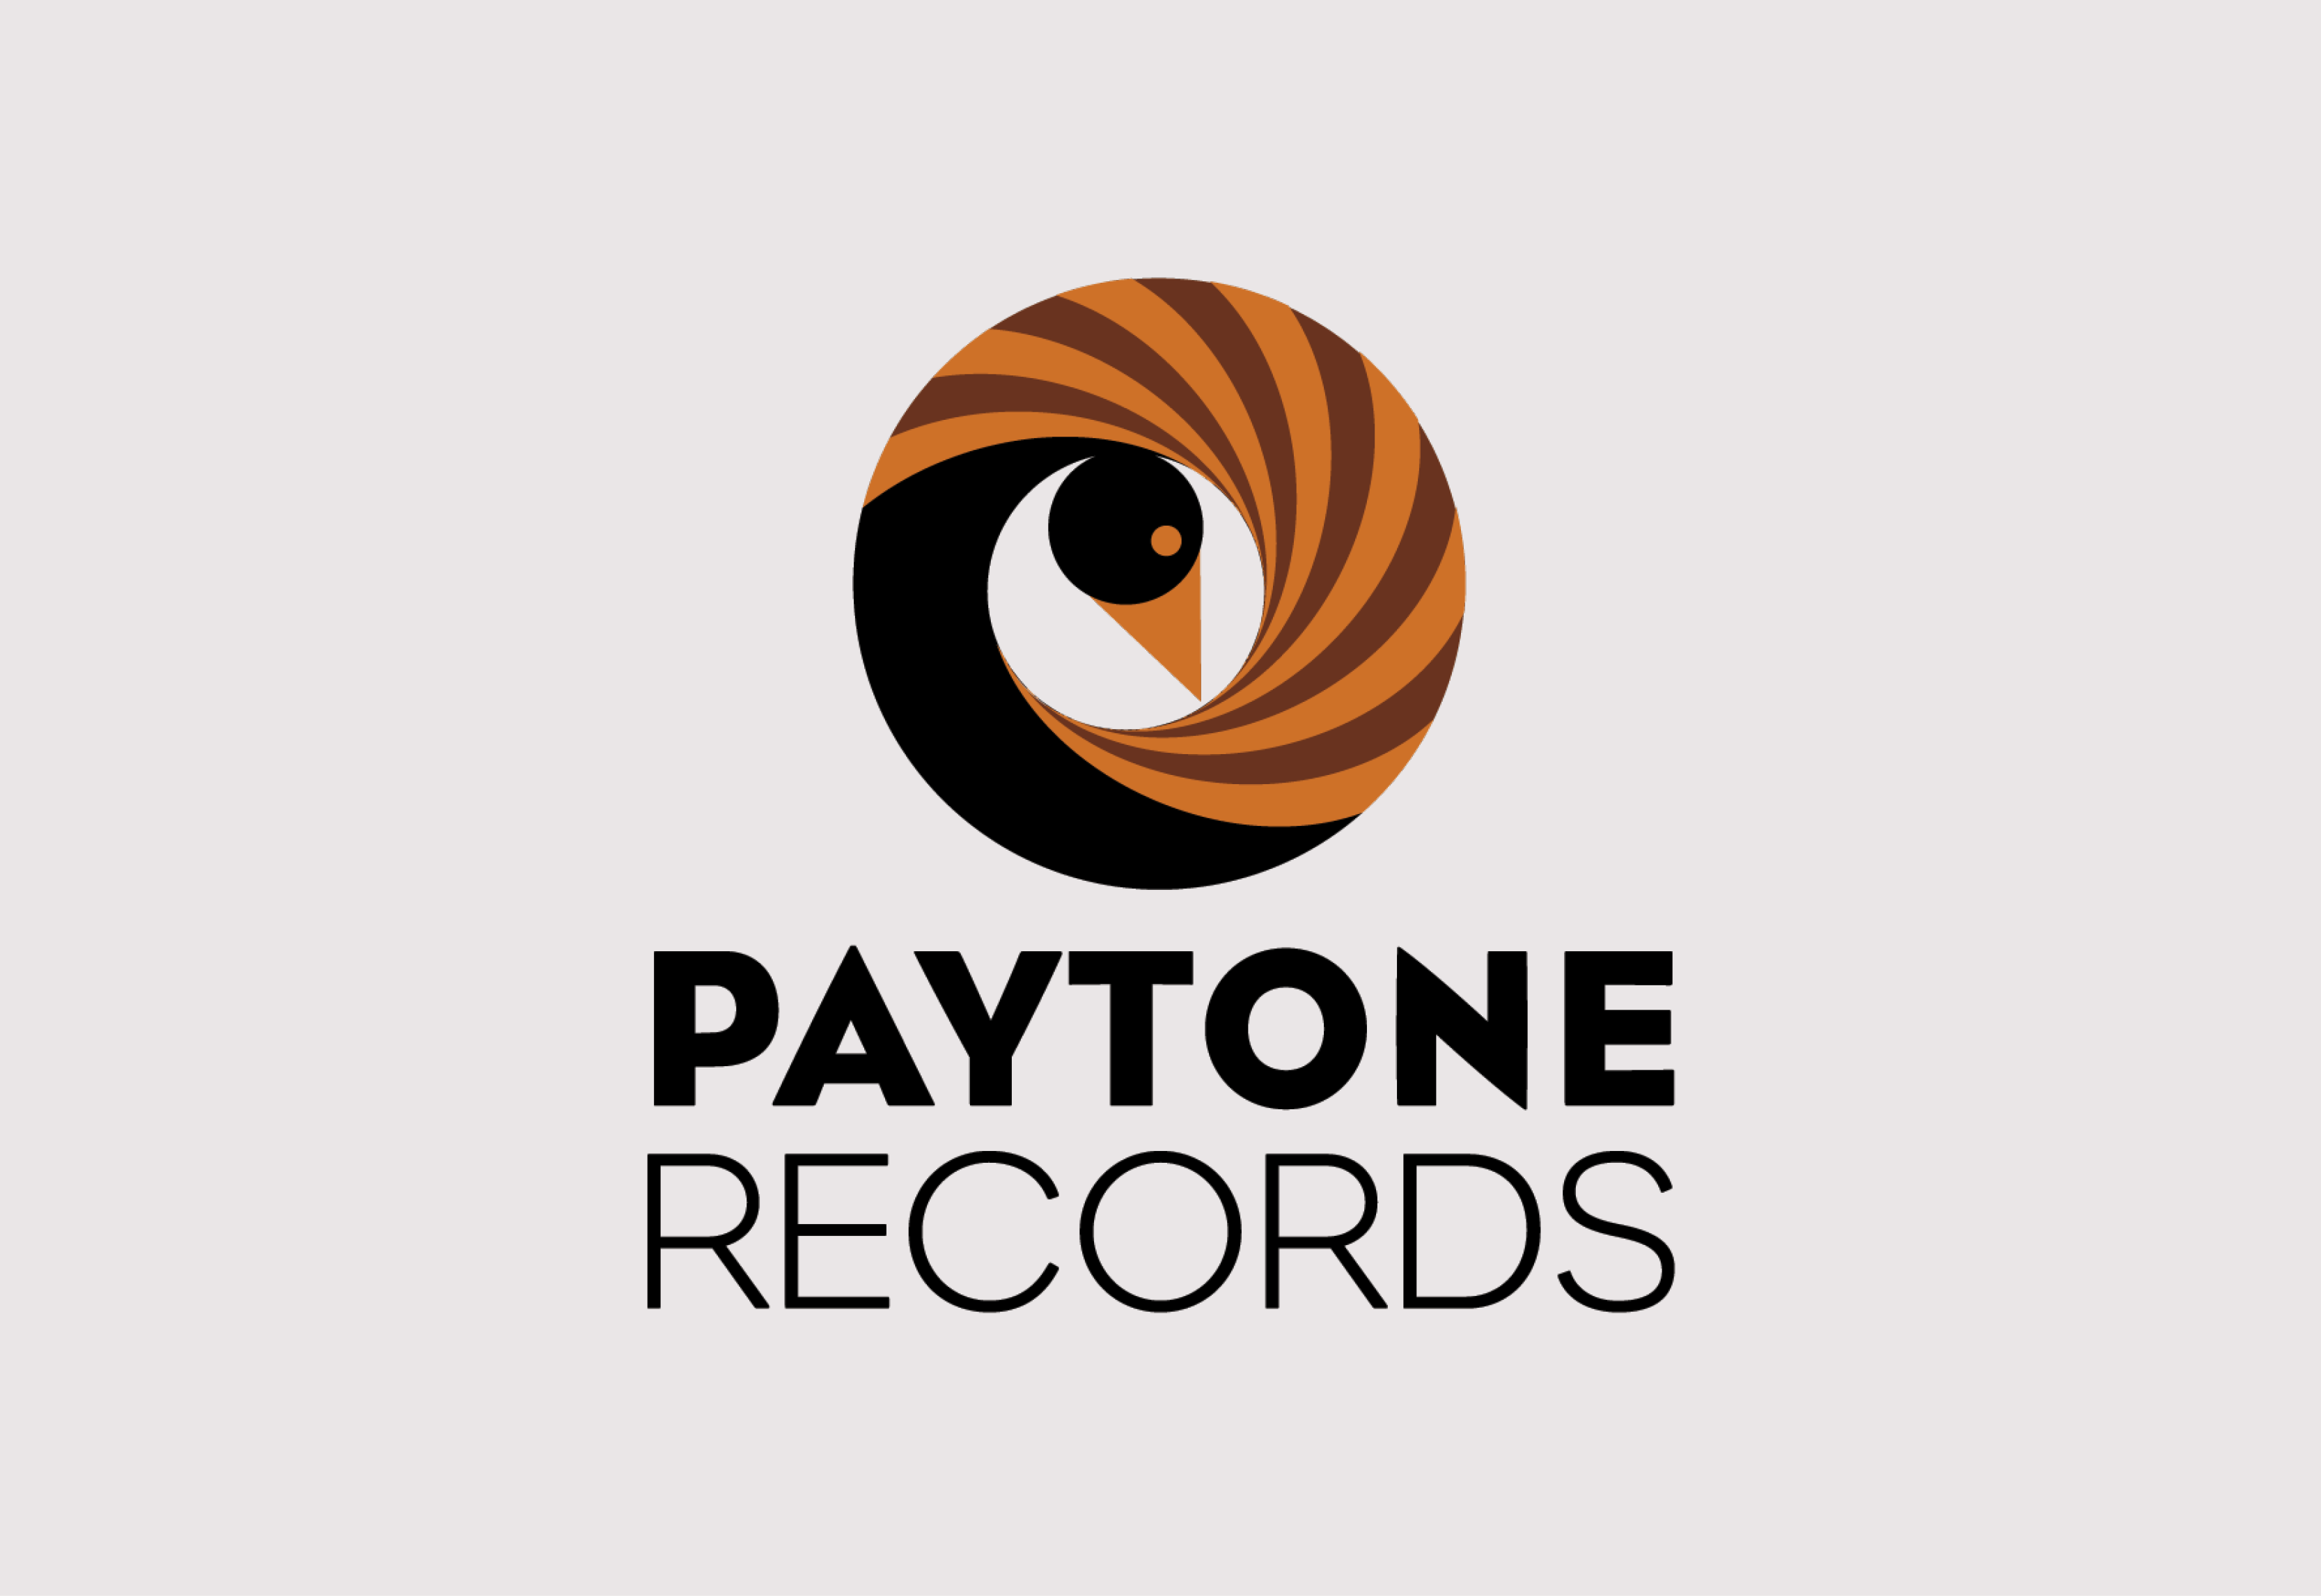 Sketches of La Logo - Nicholas Payton and Paytone Records - Seltzer Creative Group